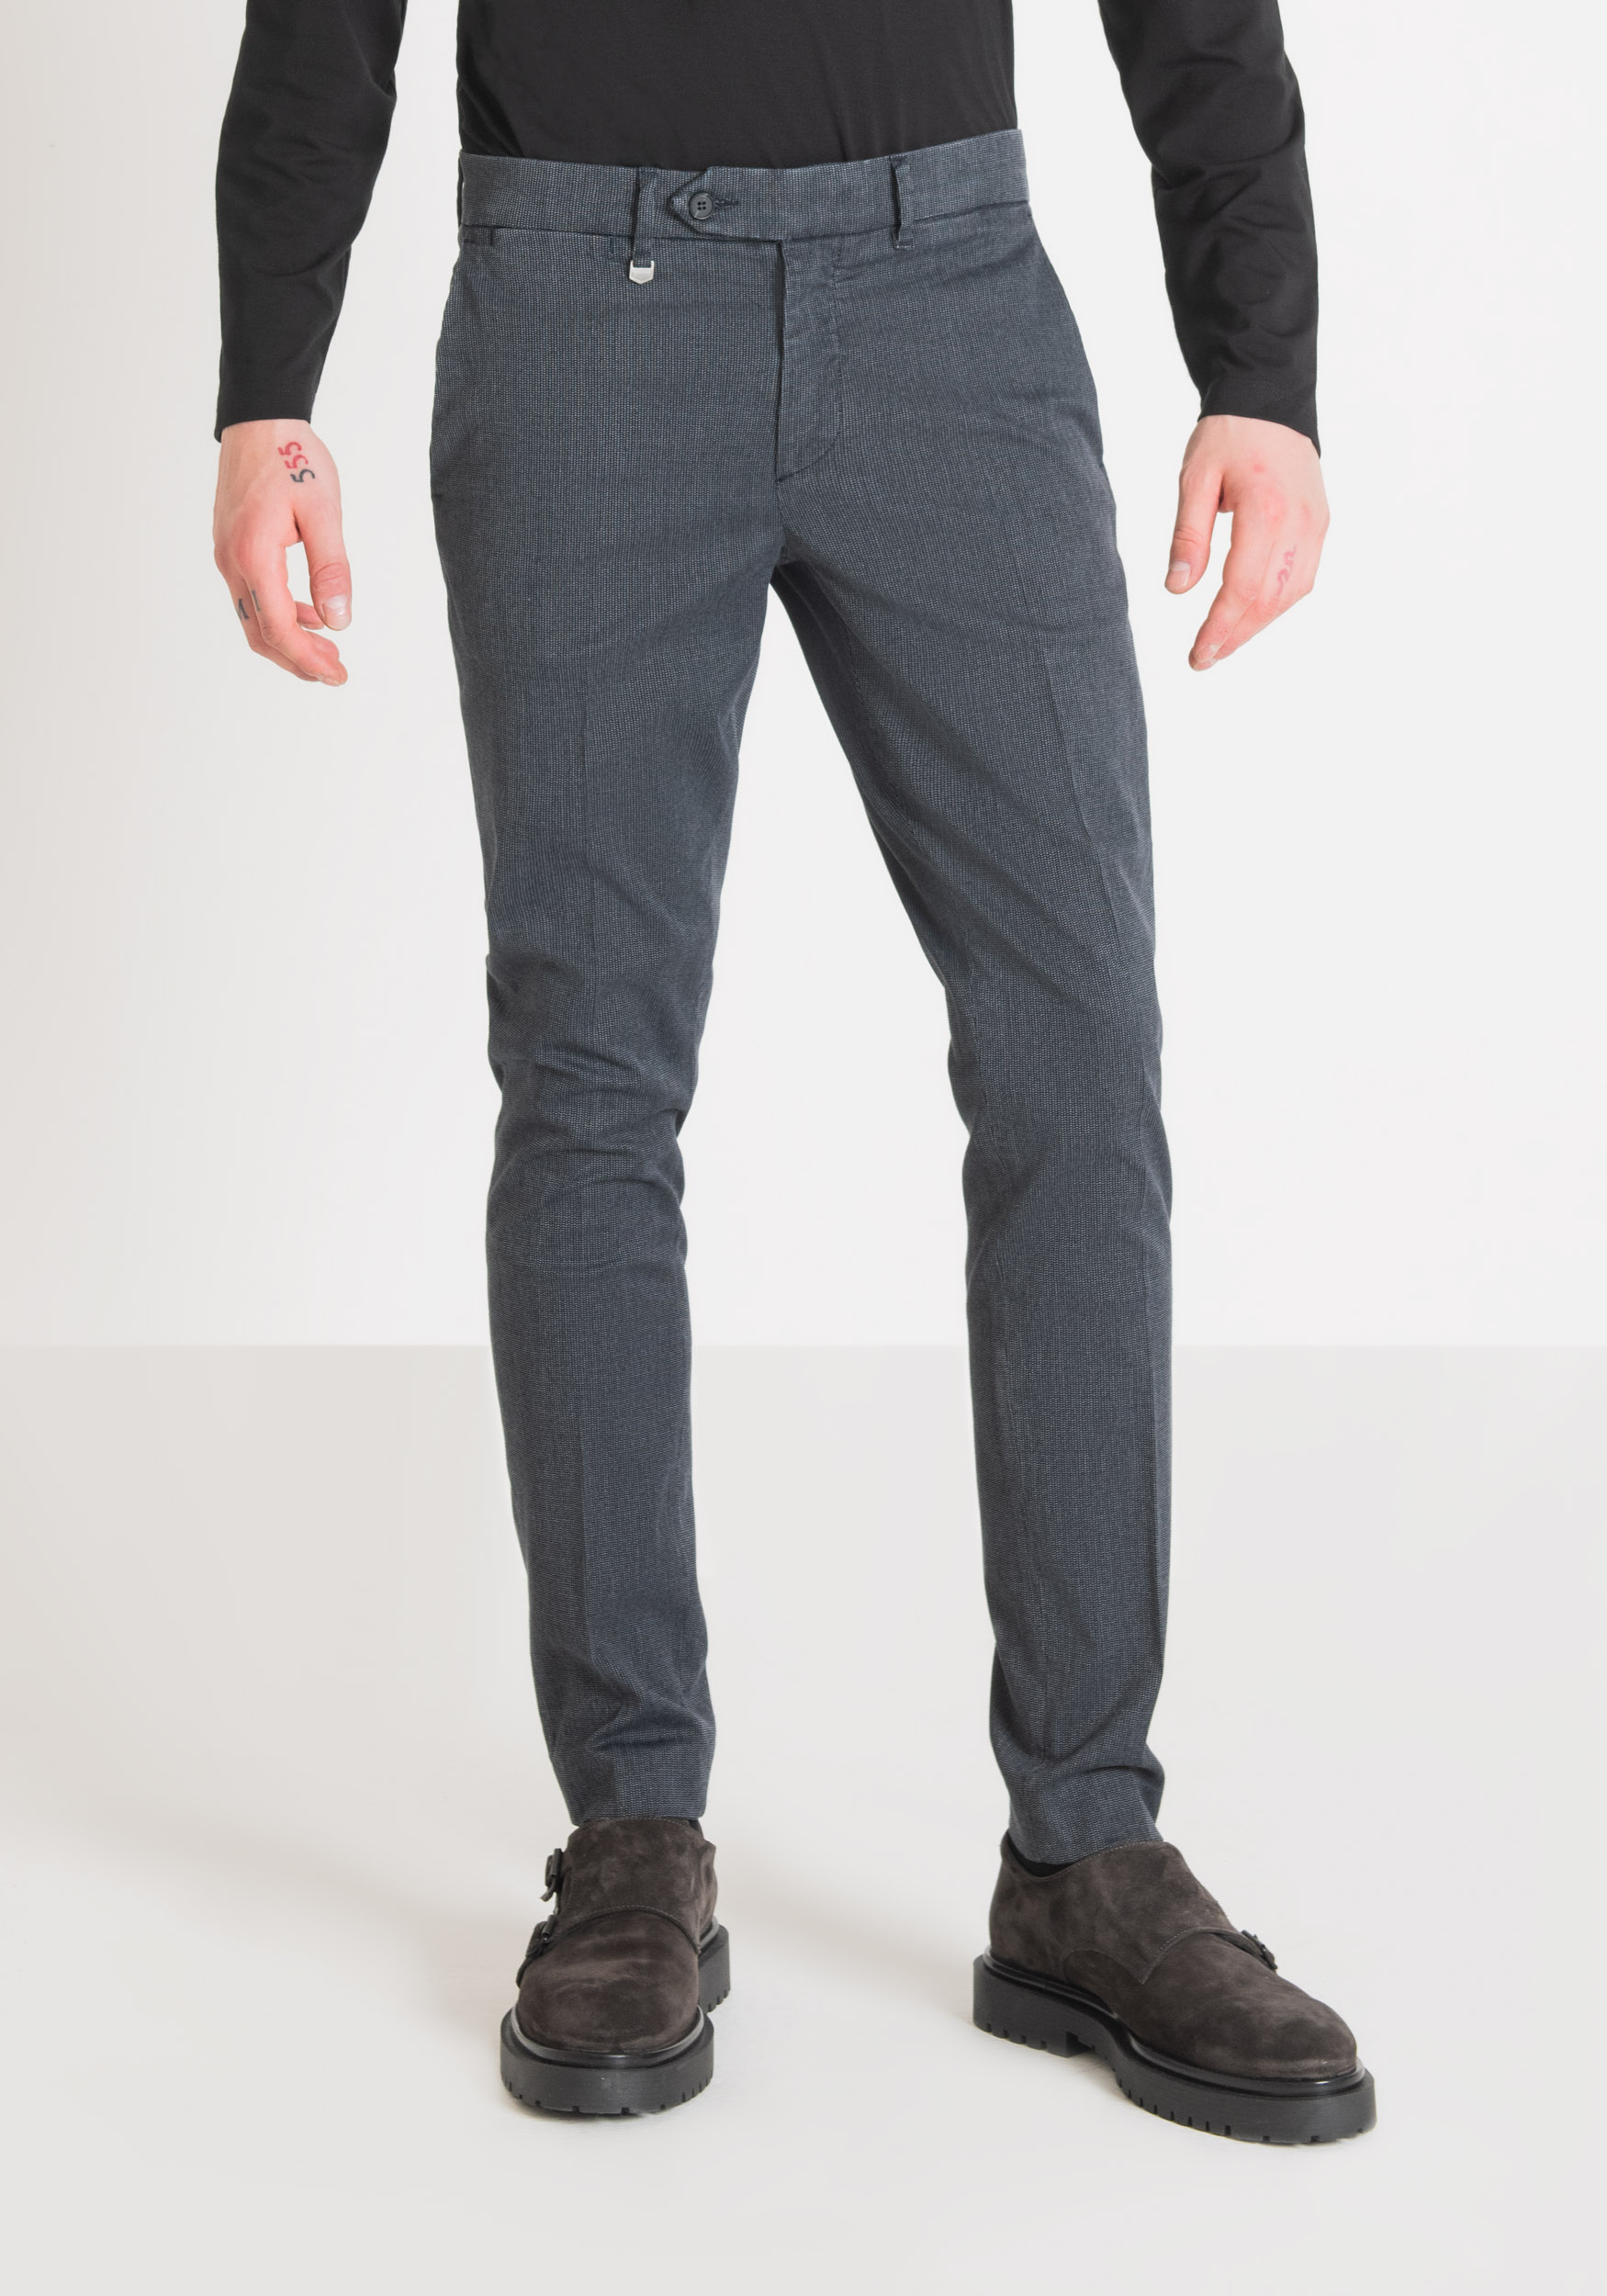 Antony Morato Pantalon Skinny Fit Bryan En Coton Elastique Micro-Armure Encre Bleu | Homme Pantalons